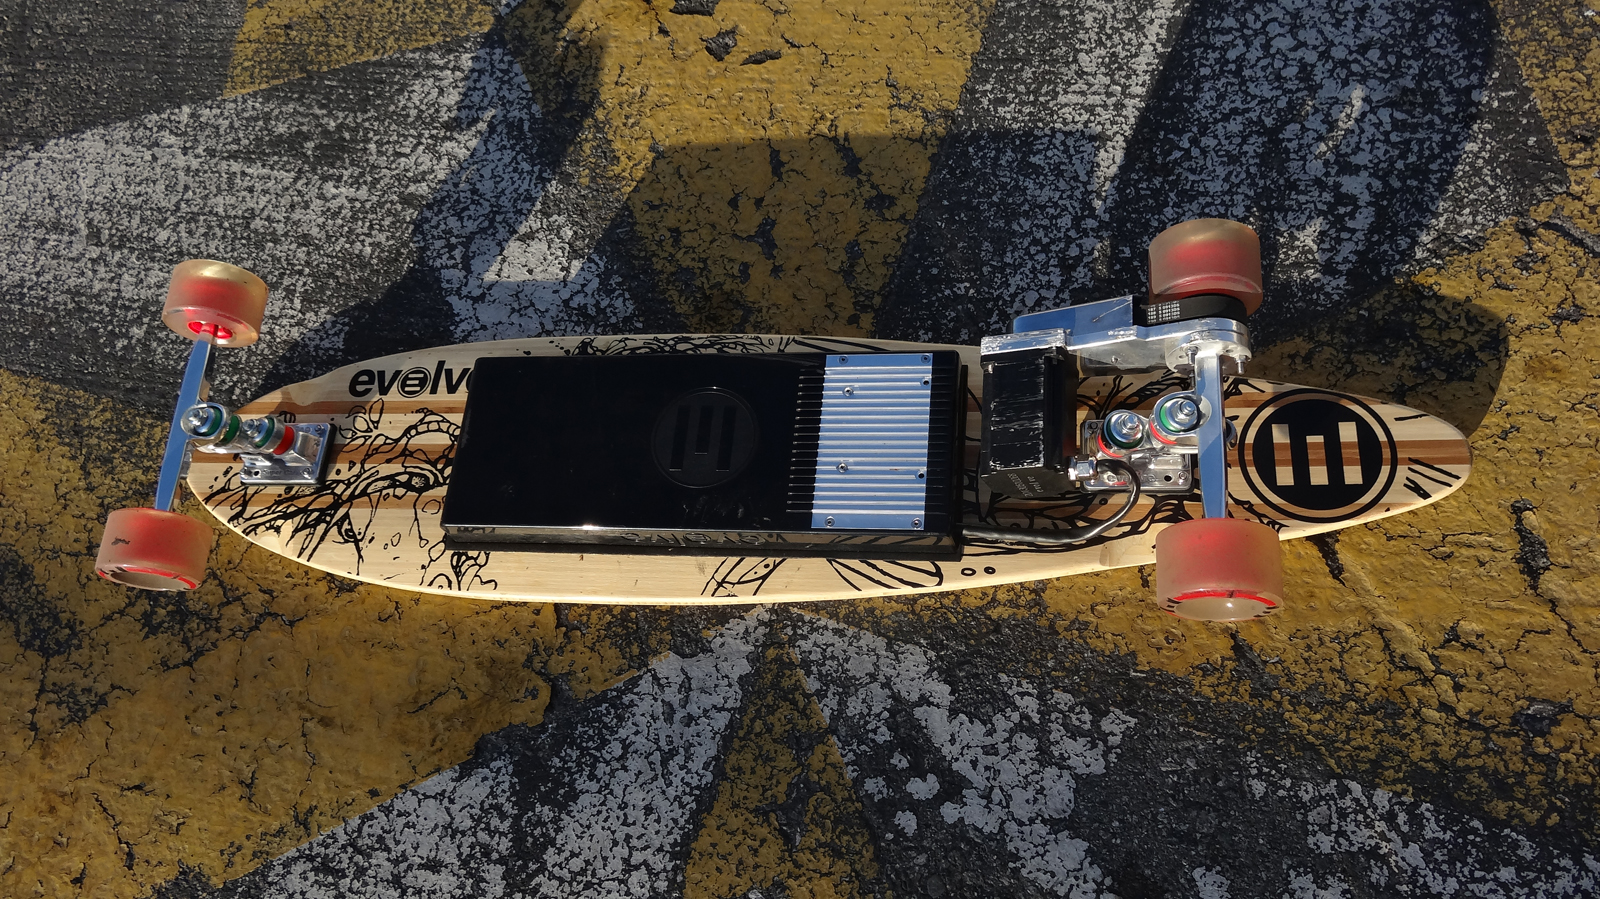 Evolve Pintail Bamboo Lightning Review: Go Go Gadget Skateboard